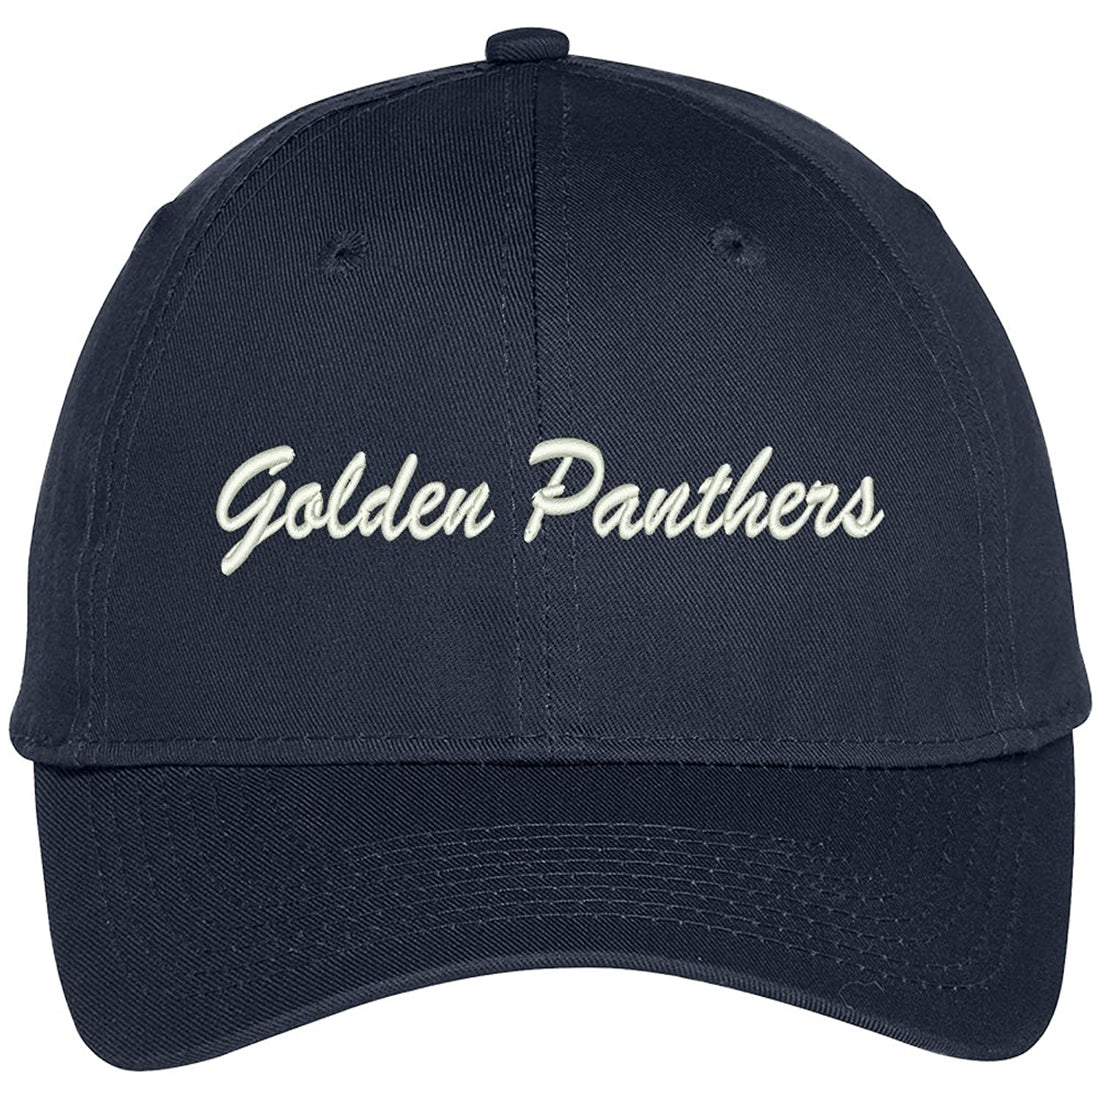 Trendy Apparel Shop Golden Panthers Embroidered Team Nickname Mascot Cap - Khaki